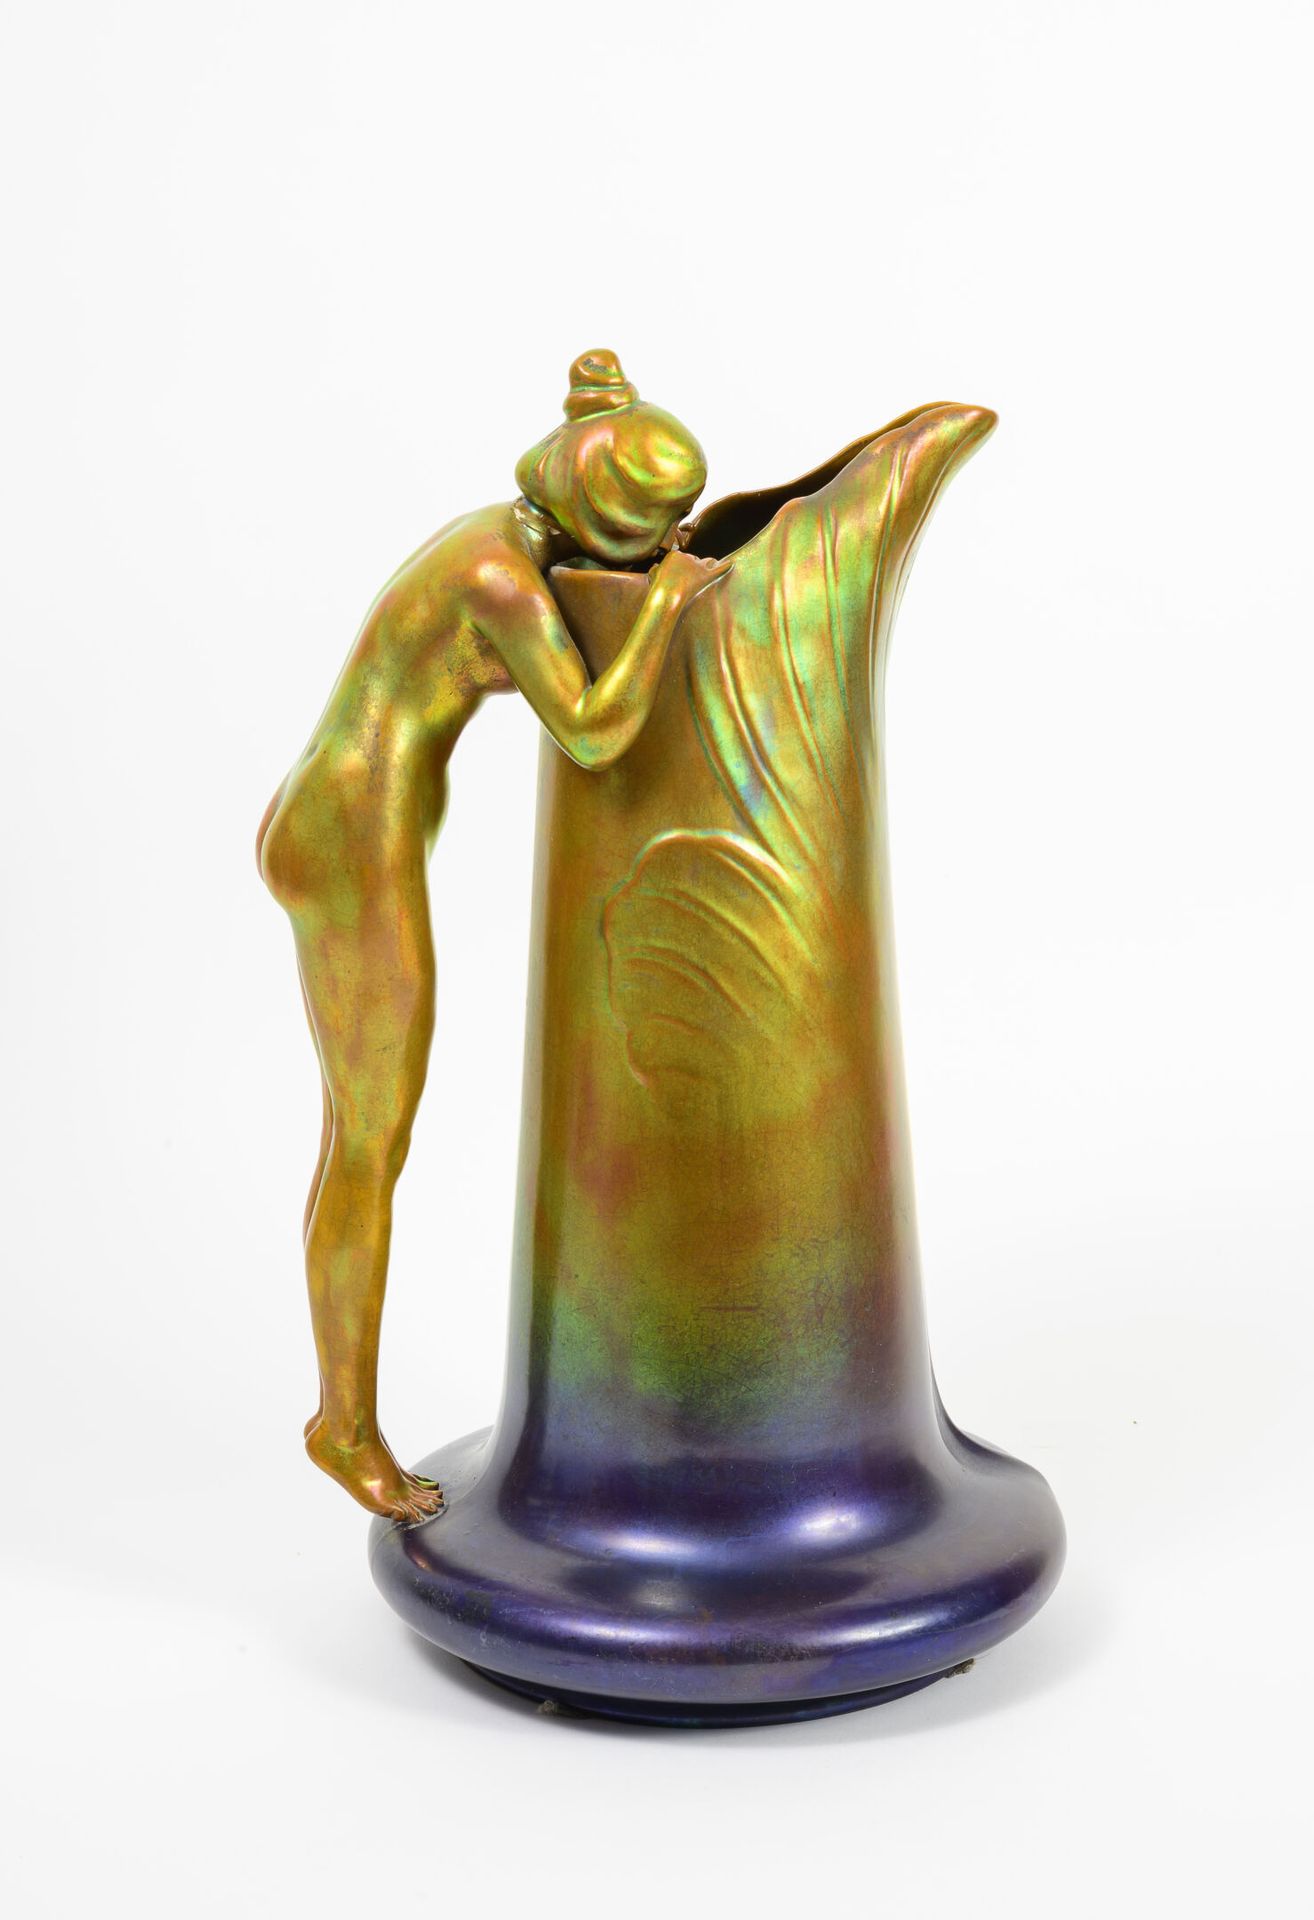 Manufacture VILMOS ZSOLNAY (1840-1900) à Pecs 
釉面和彩虹色的紫色至金色陶瓷的花瓶雕塑，装饰着一个观察花瓶底部的裸&hellip;